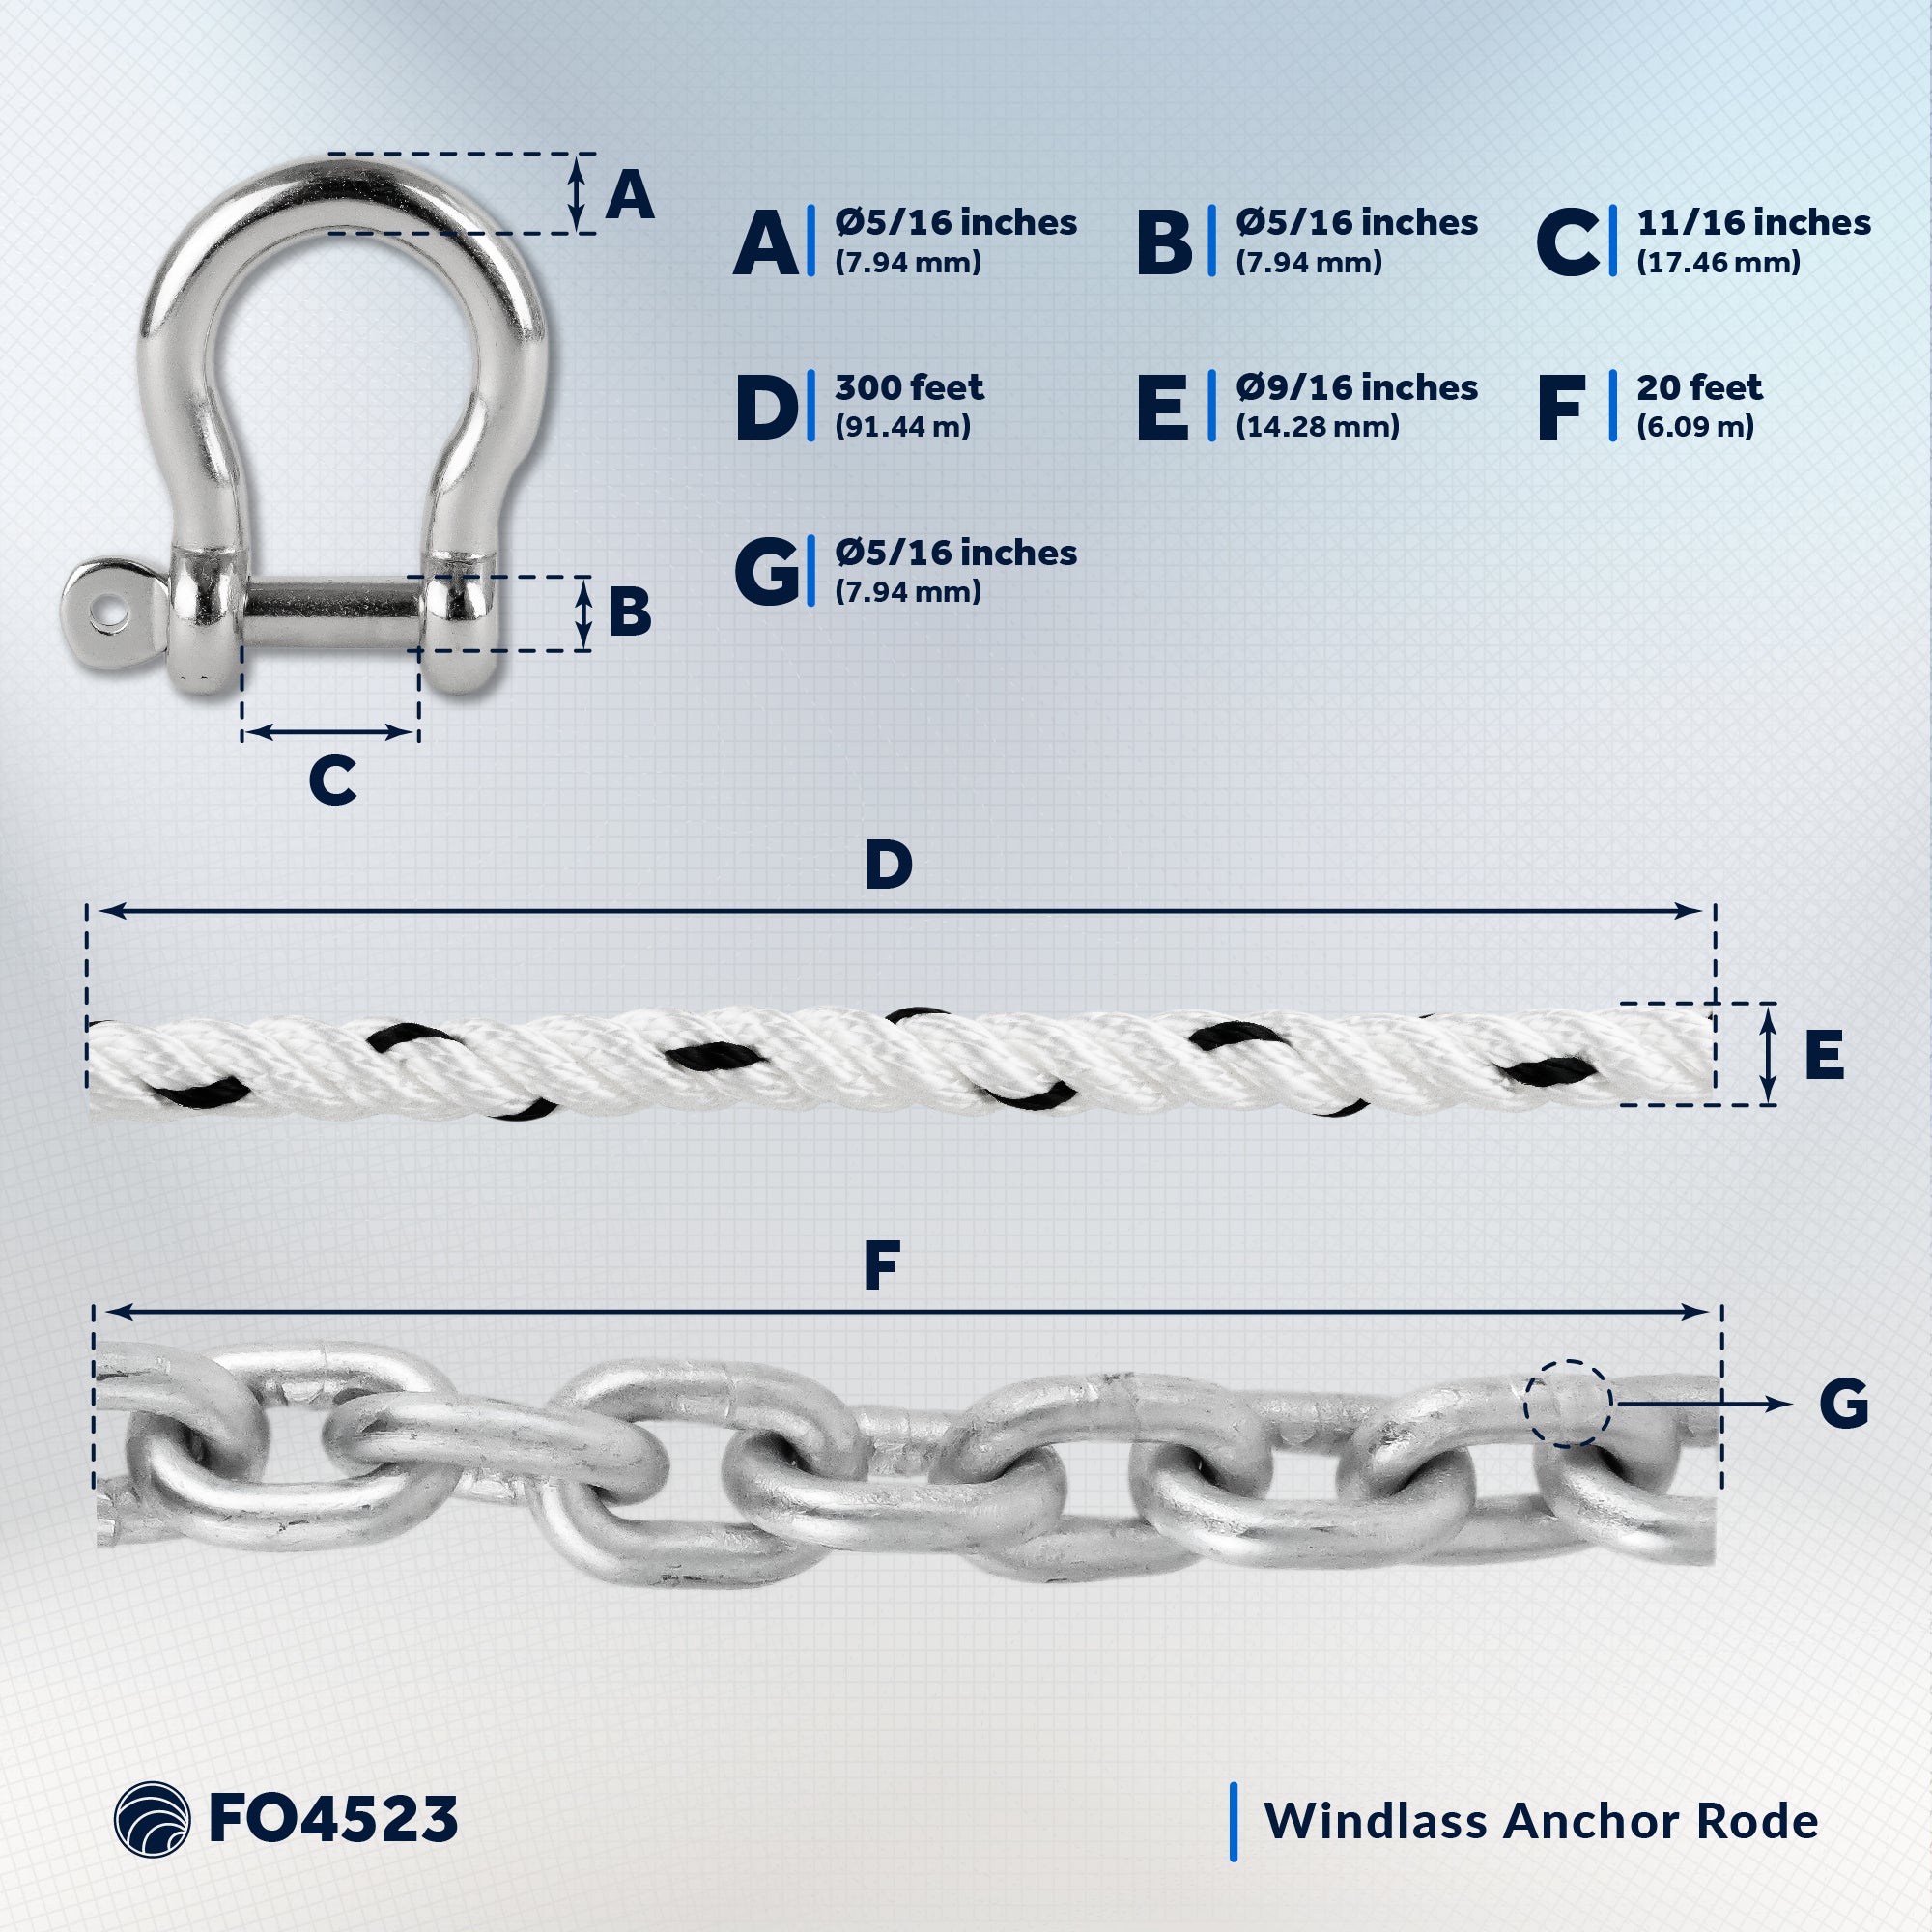 Windlass Anchor Rode, 9/16" x 300' Nylon 3-Strand Rope, 5/16" x 20' G4 Hot-Dipped Galvanized Galvanized Steel Chain - FO4523